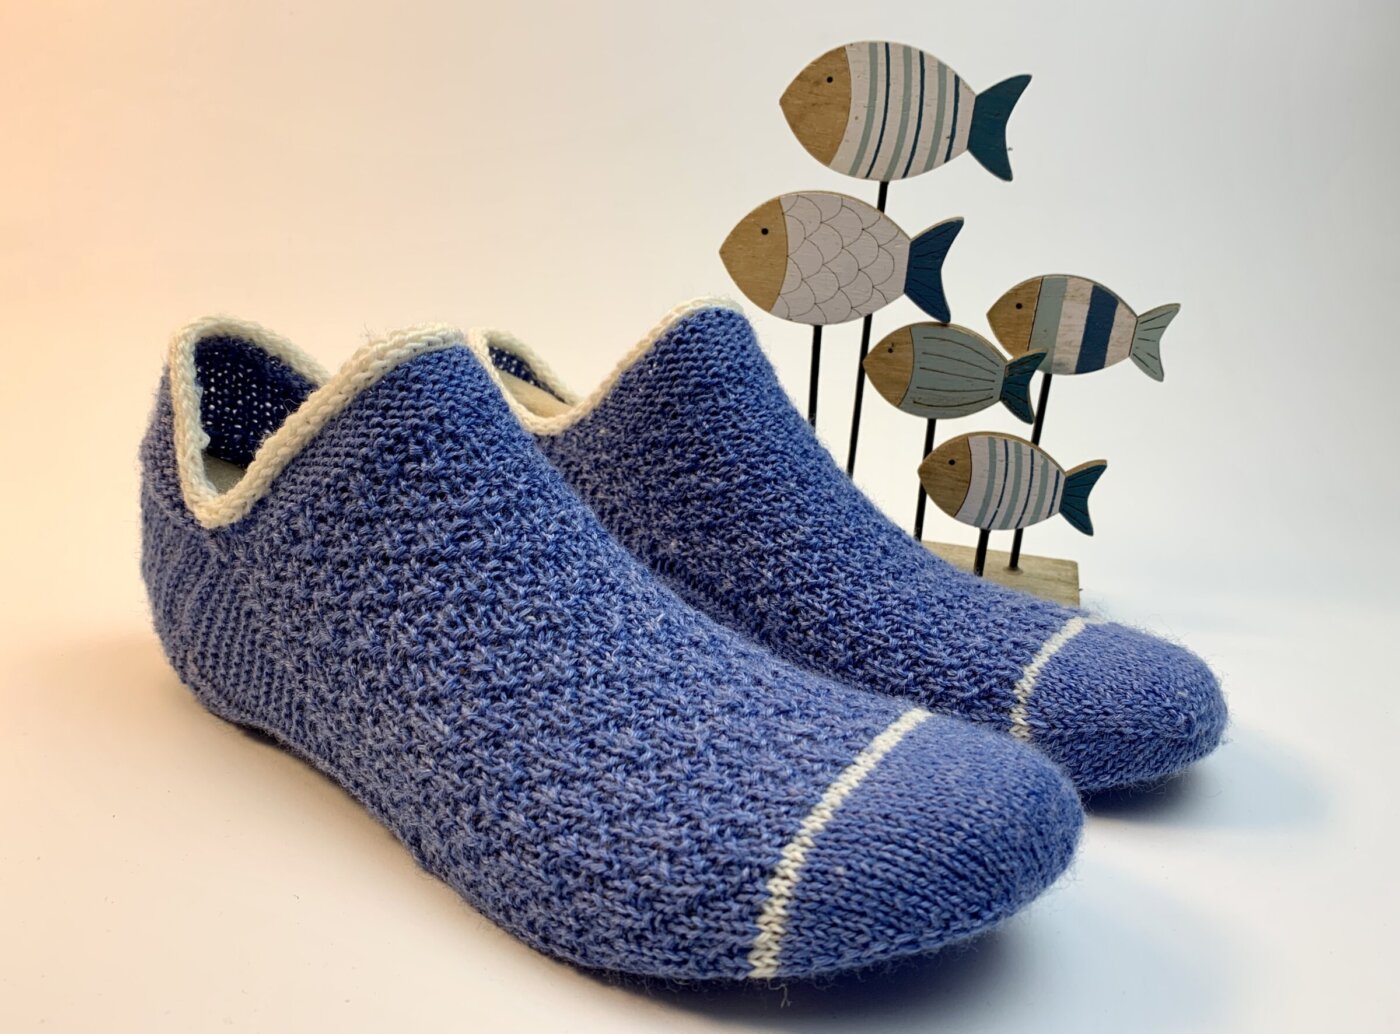 Utsubo-Socken mit Alternativen